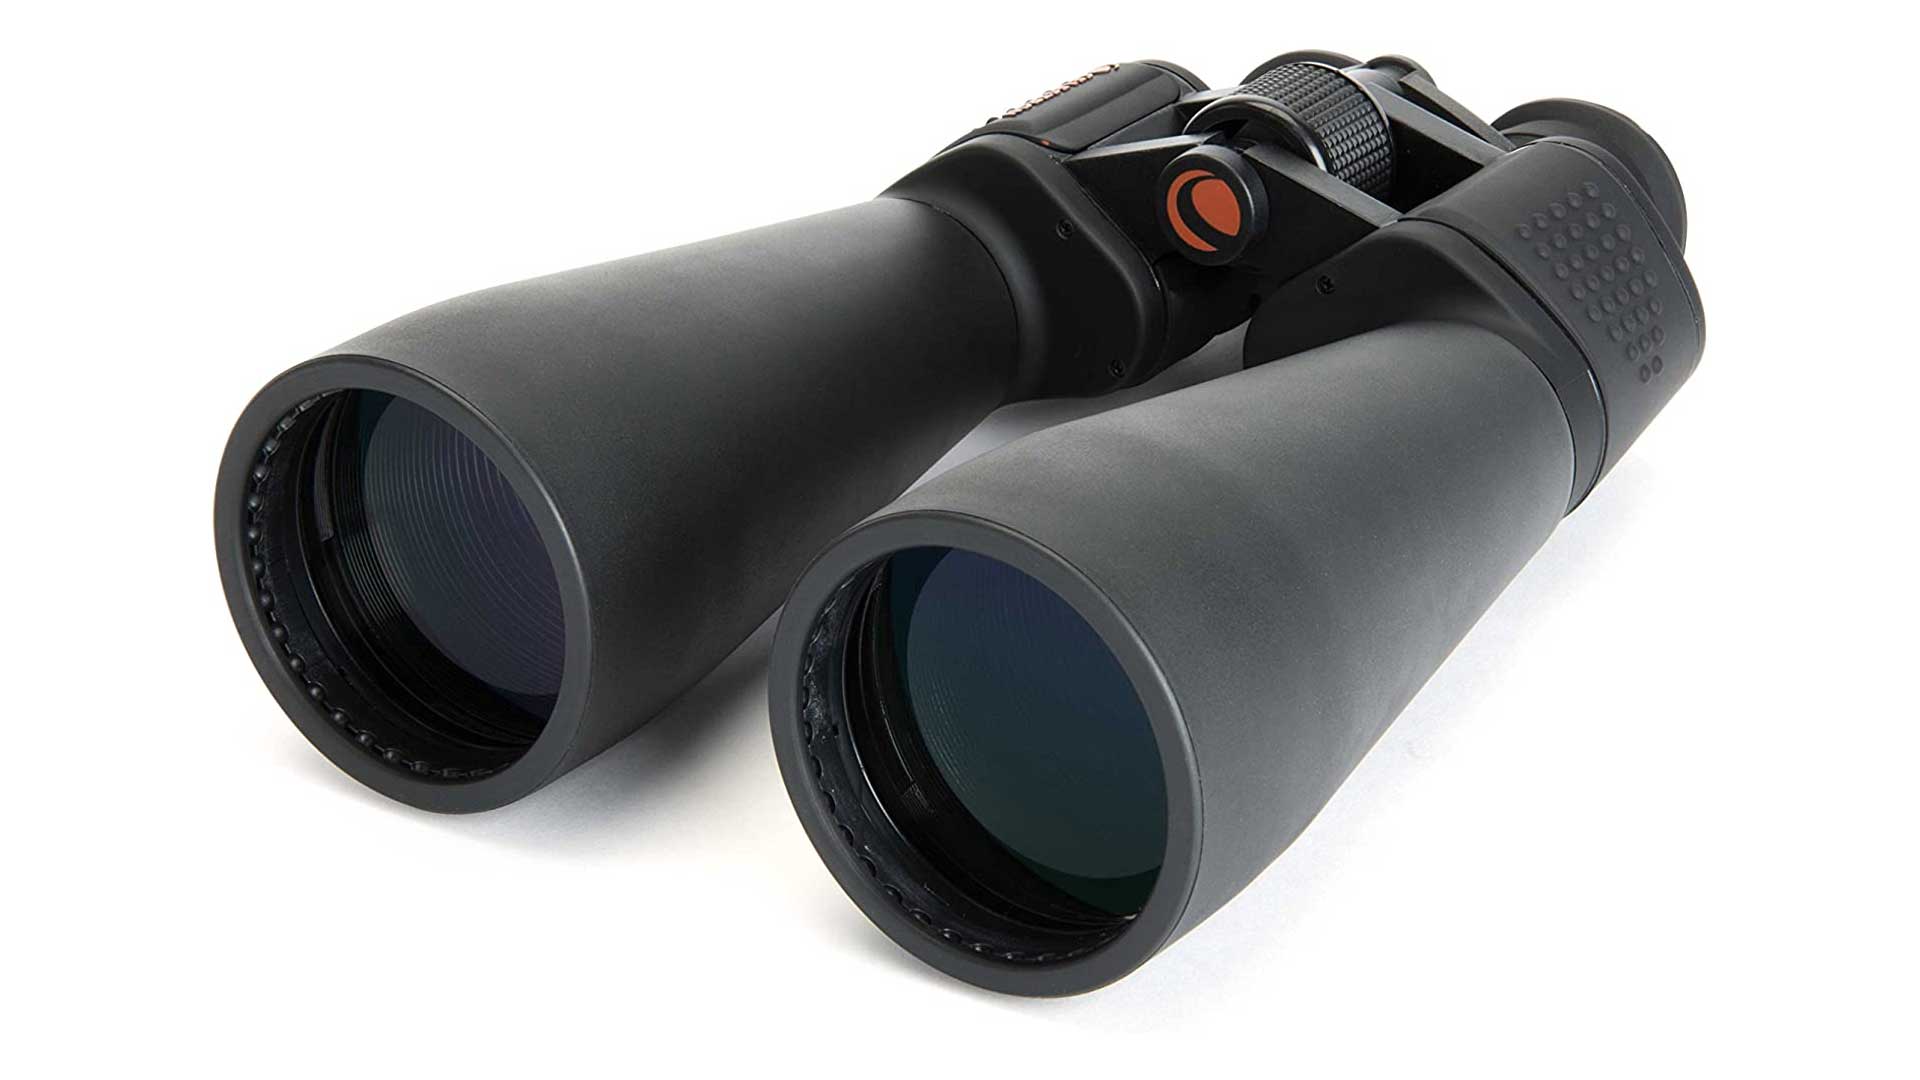 Pair of Celestron binoculars product image